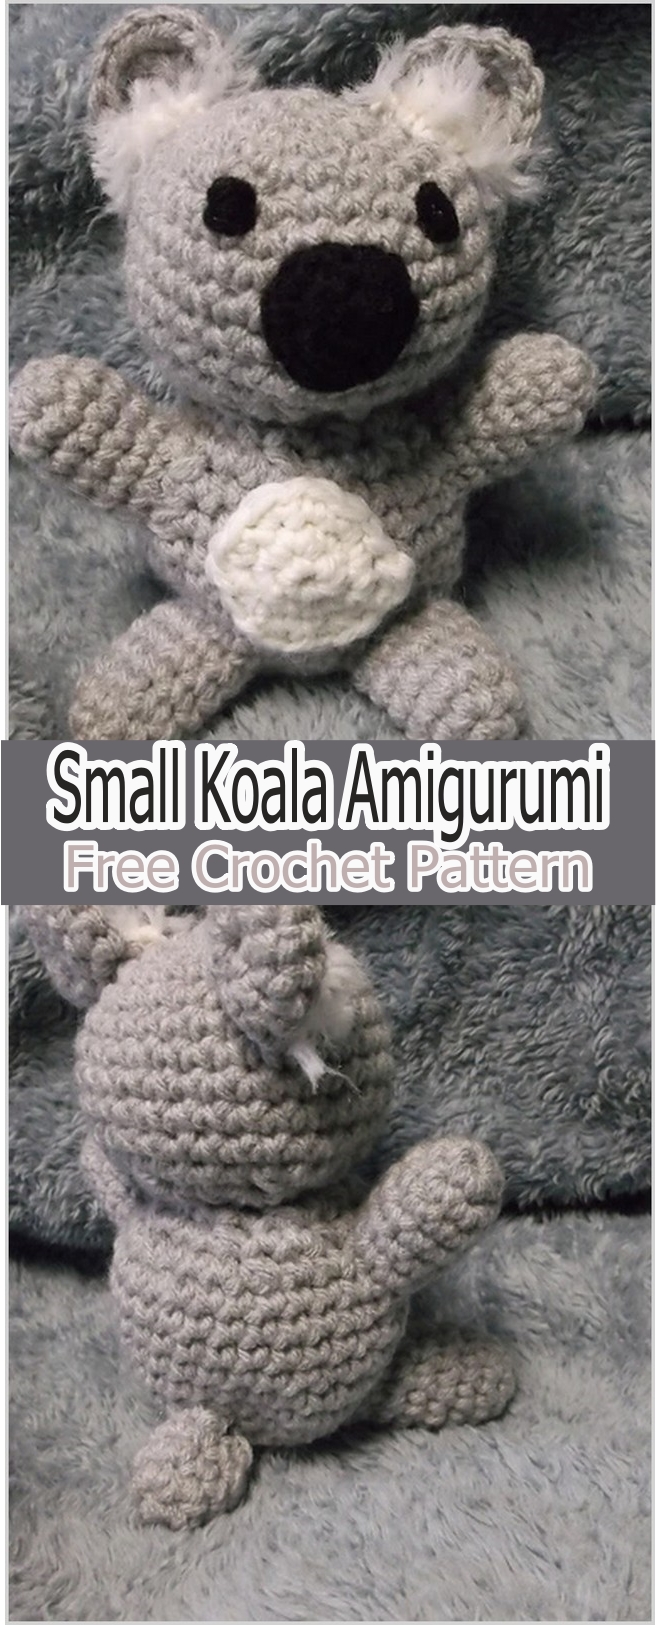 Small Koala Amigurumi